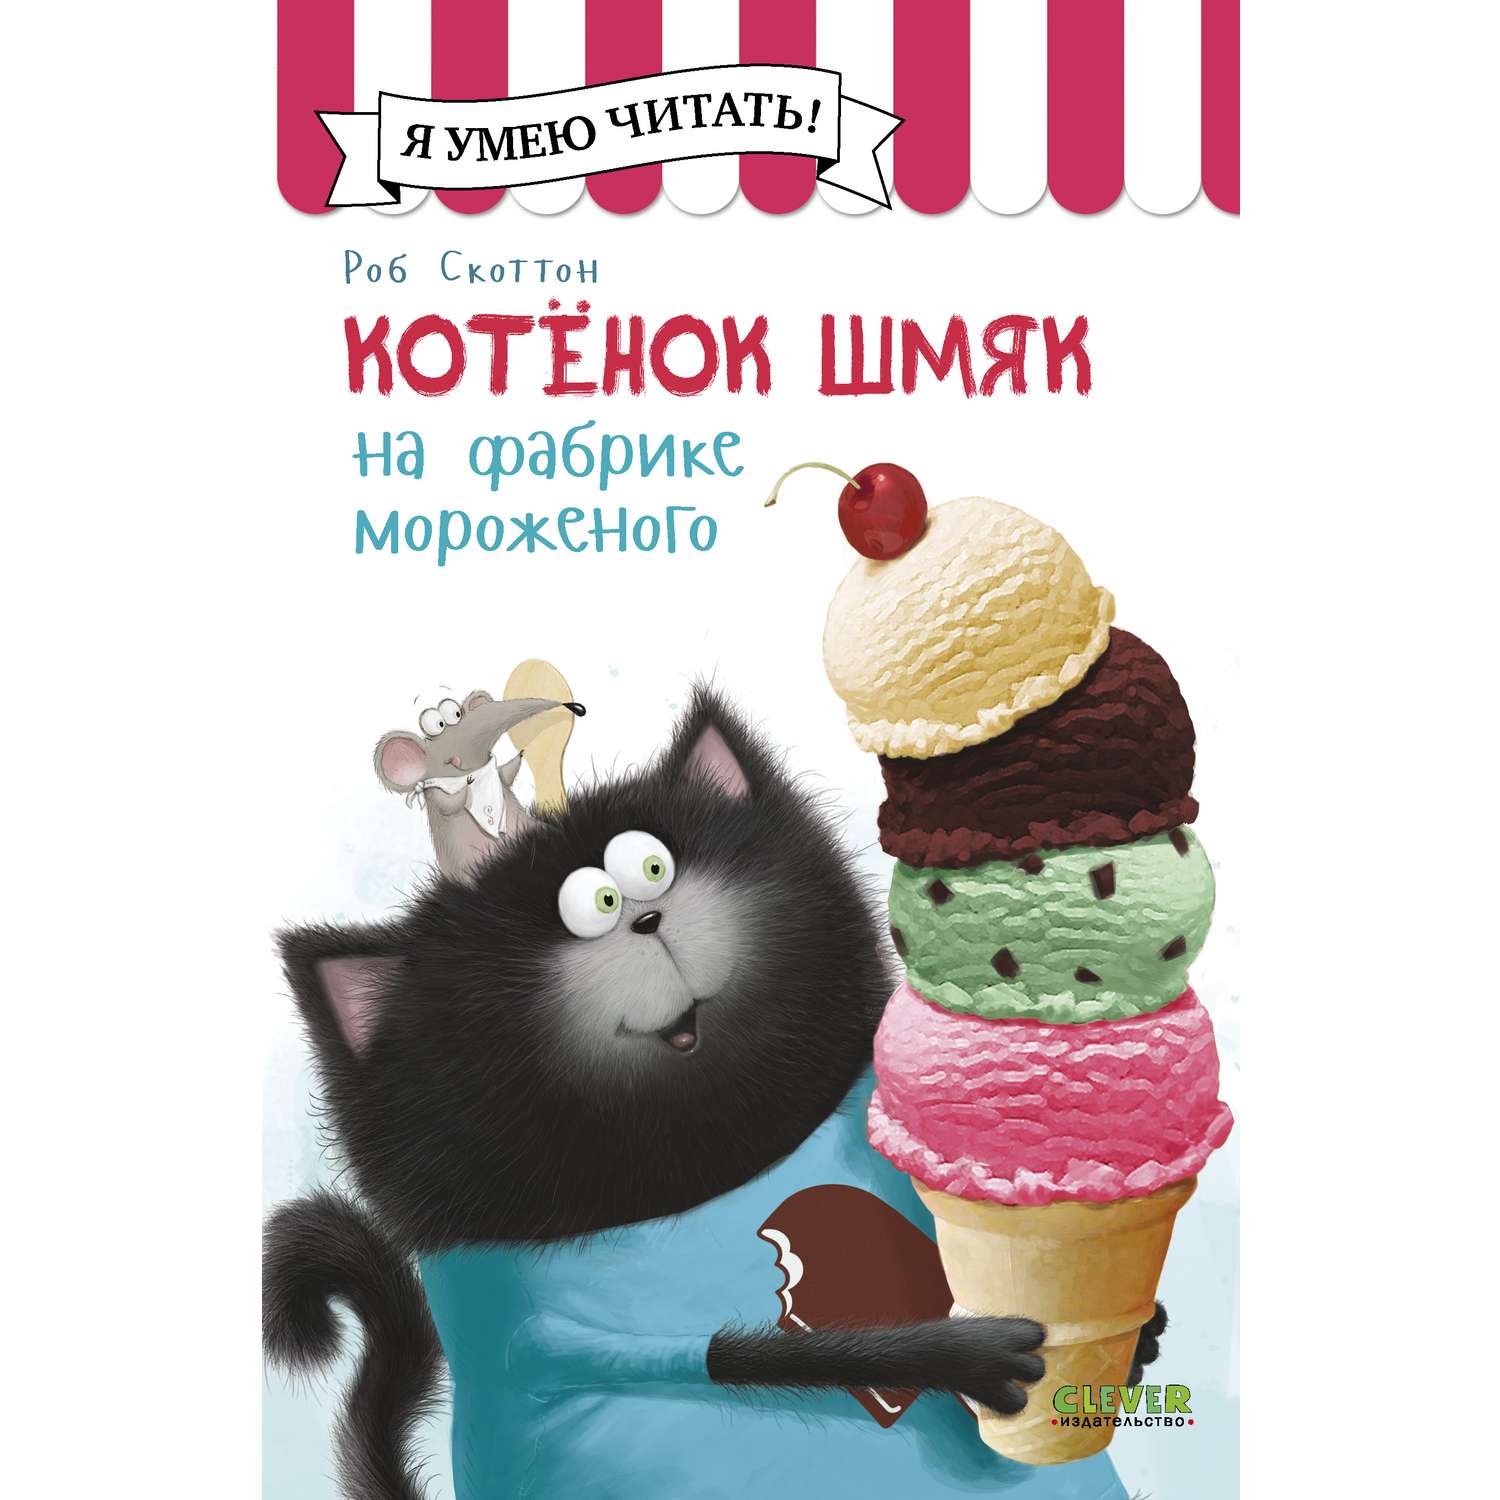 Книга Clever Издательство Котенок Шмяк на фабрике мороженого - фото 2